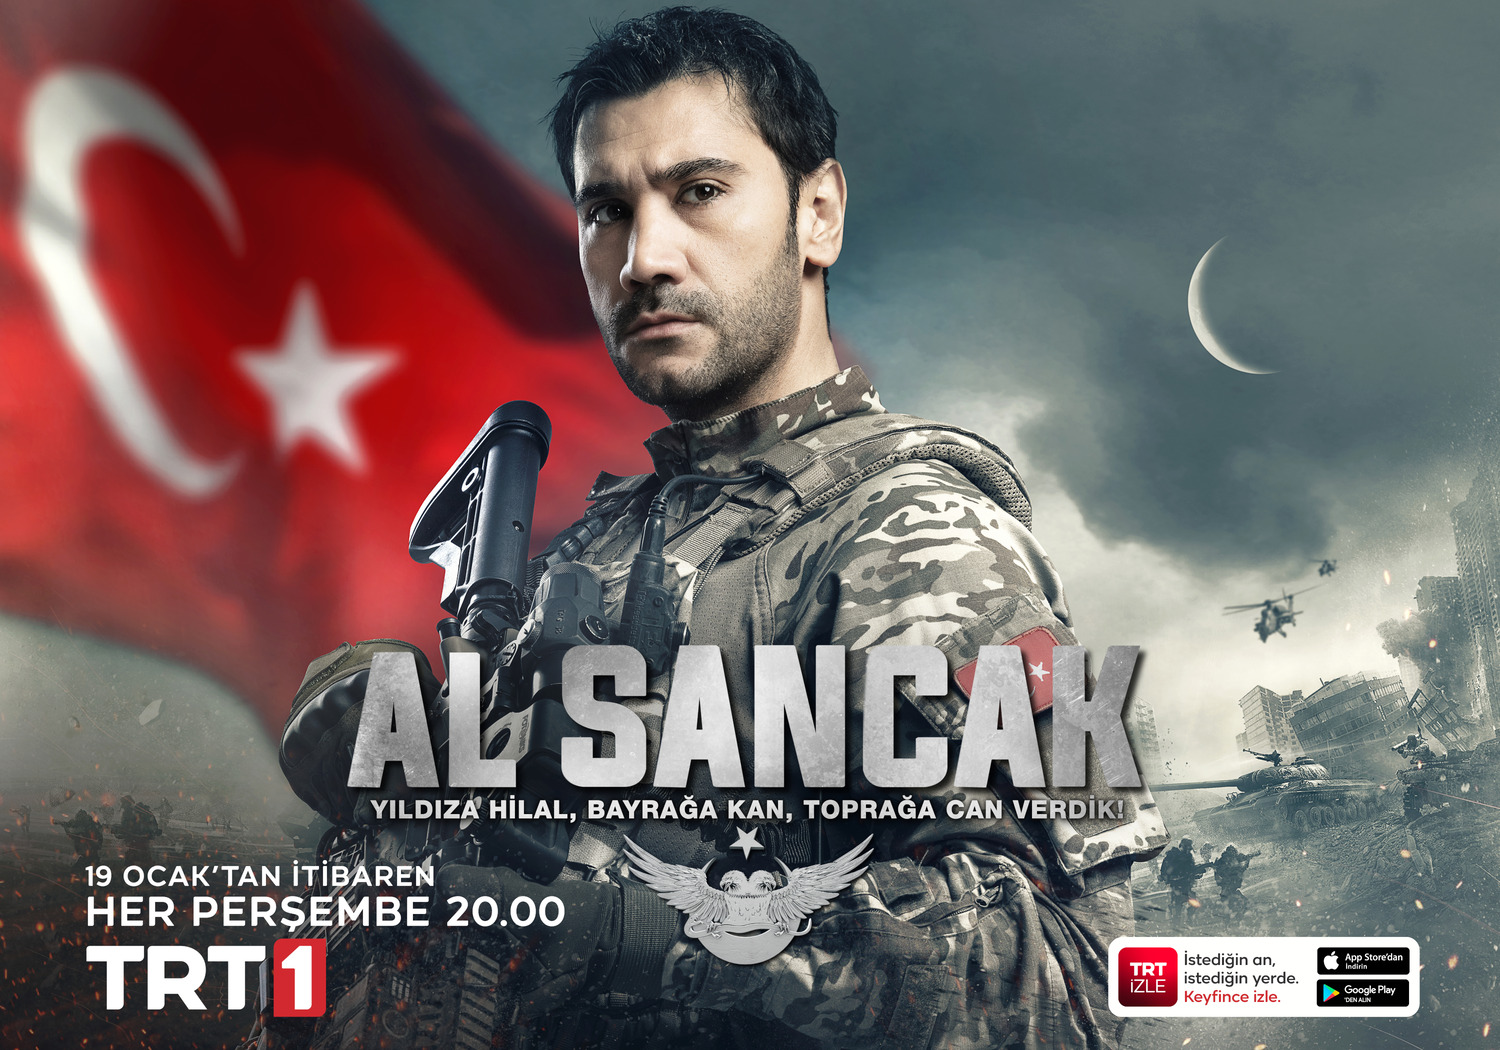 Extra Large TV Poster Image for Al Sancak (#5 of 20)